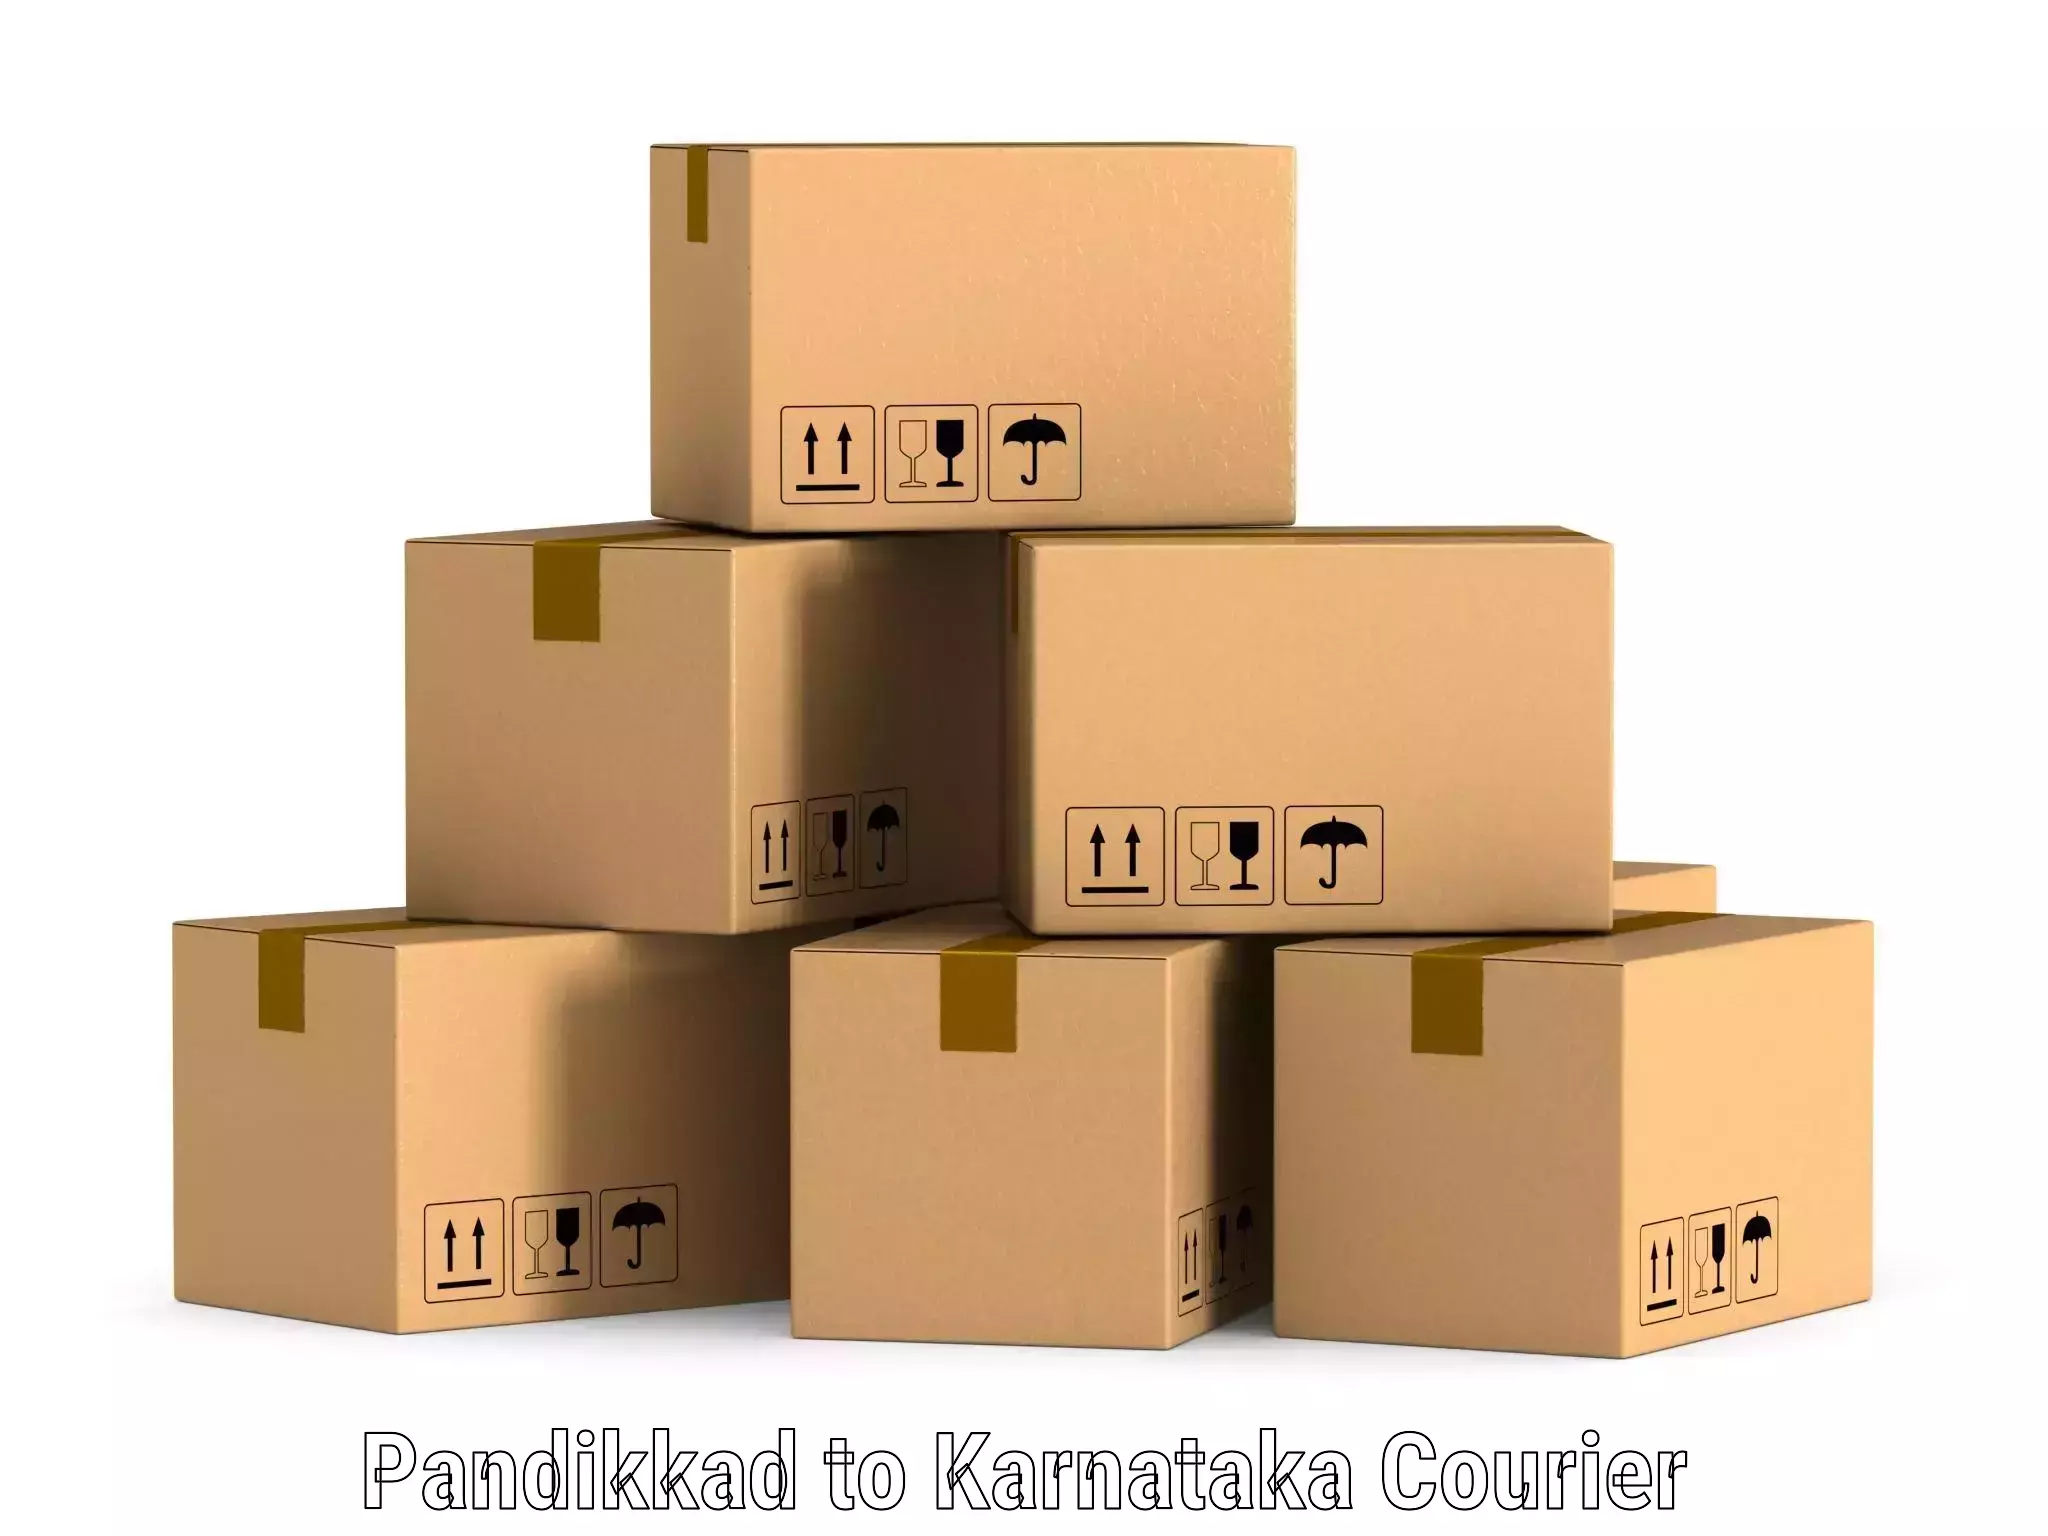 Cost-effective courier solutions Pandikkad to Karnataka